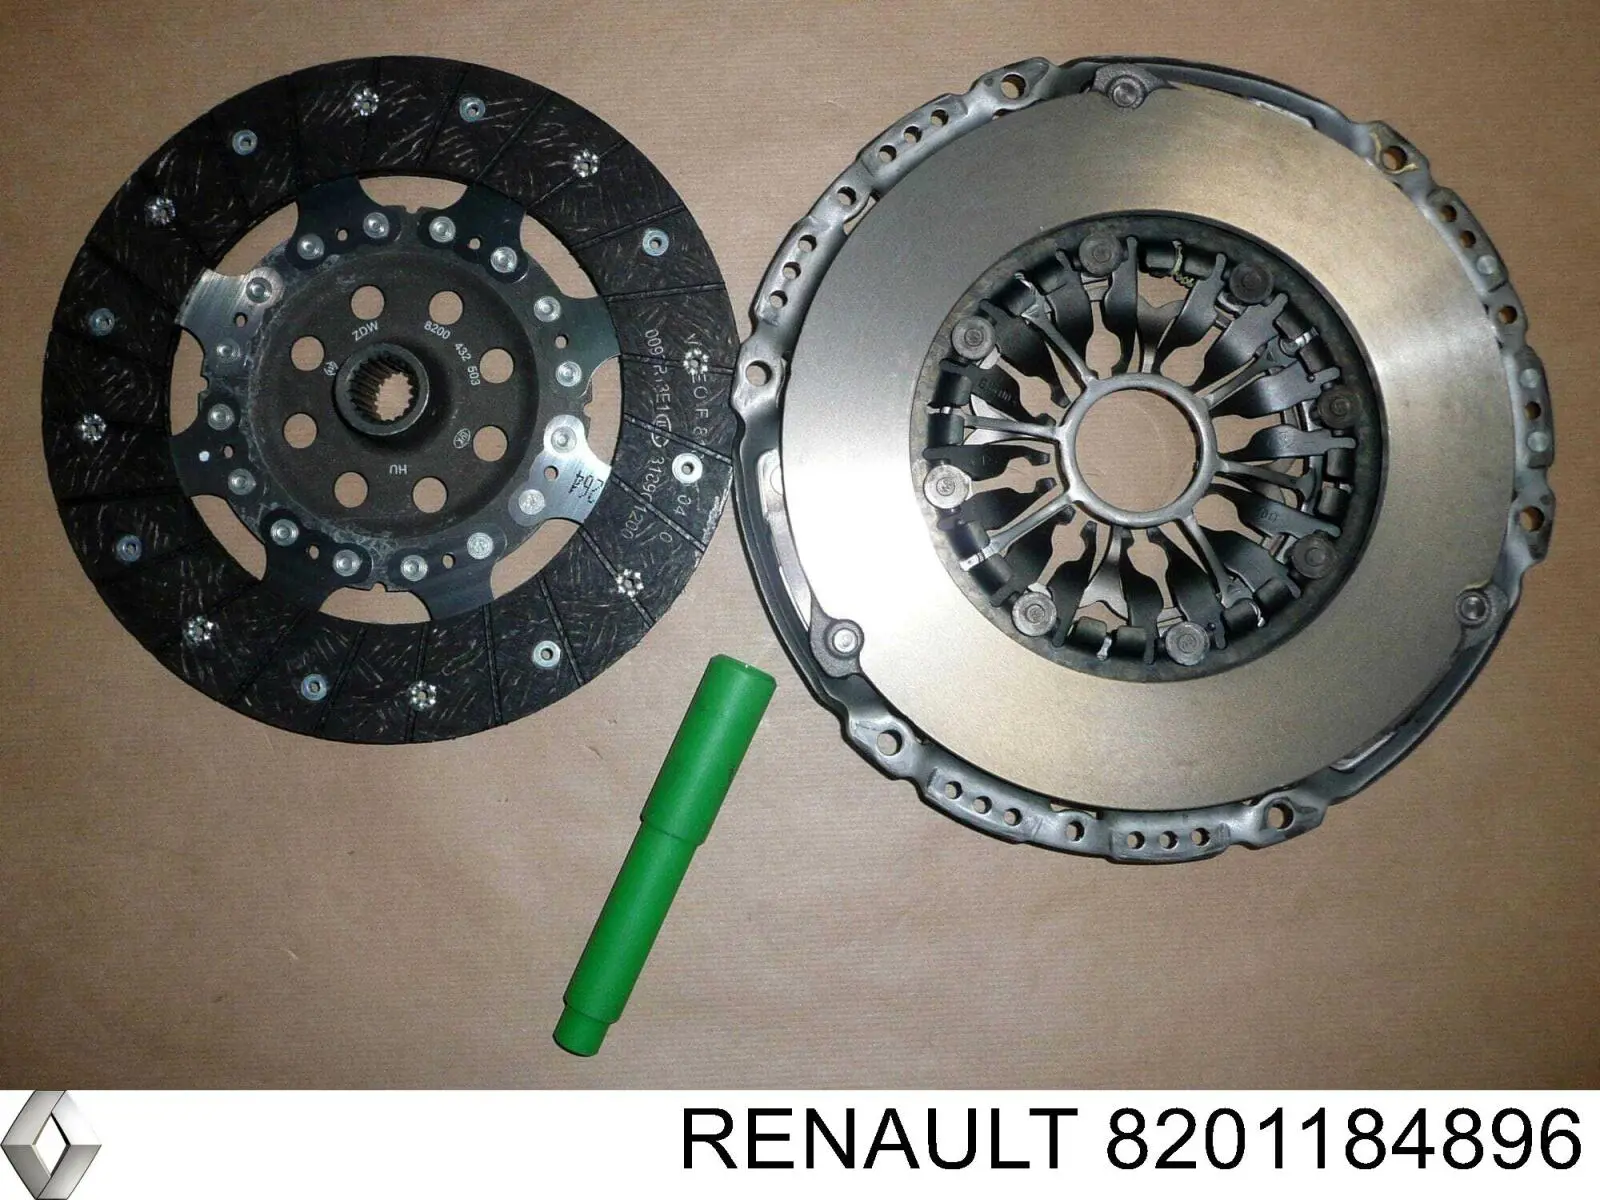 8201184896 Renault (RVI) embrague